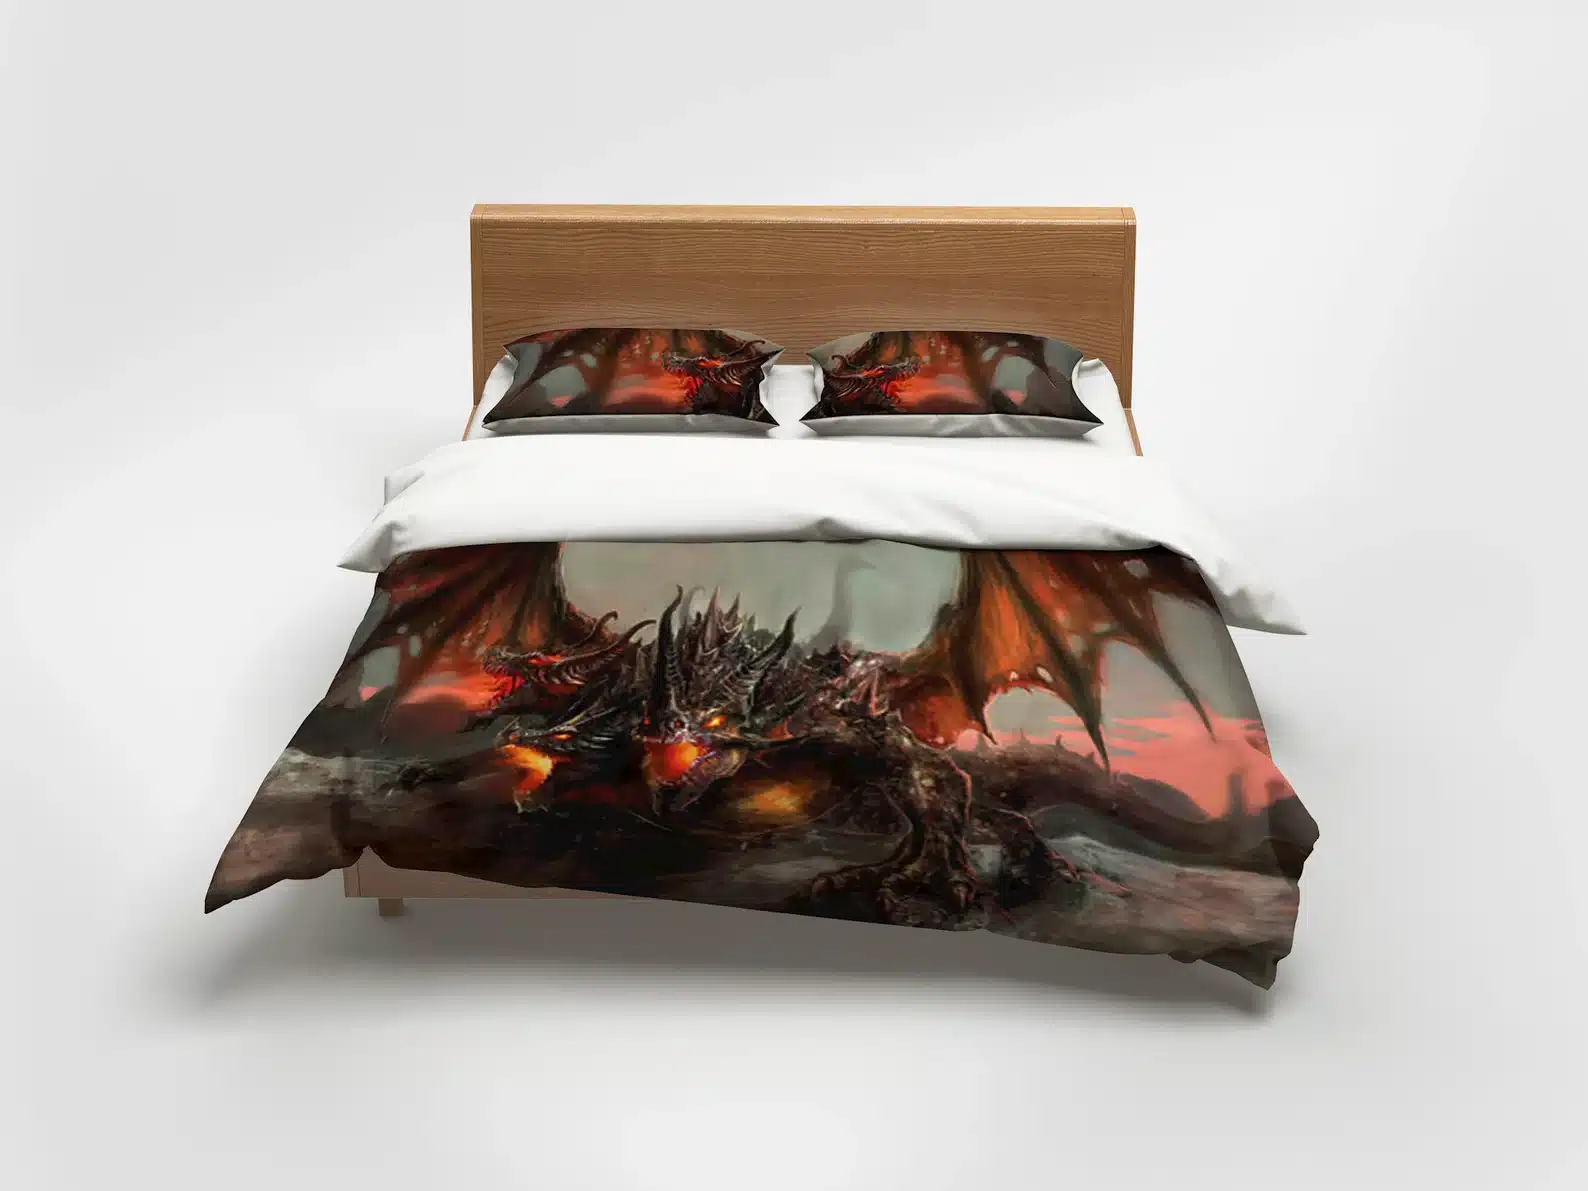 Dragon Bedding